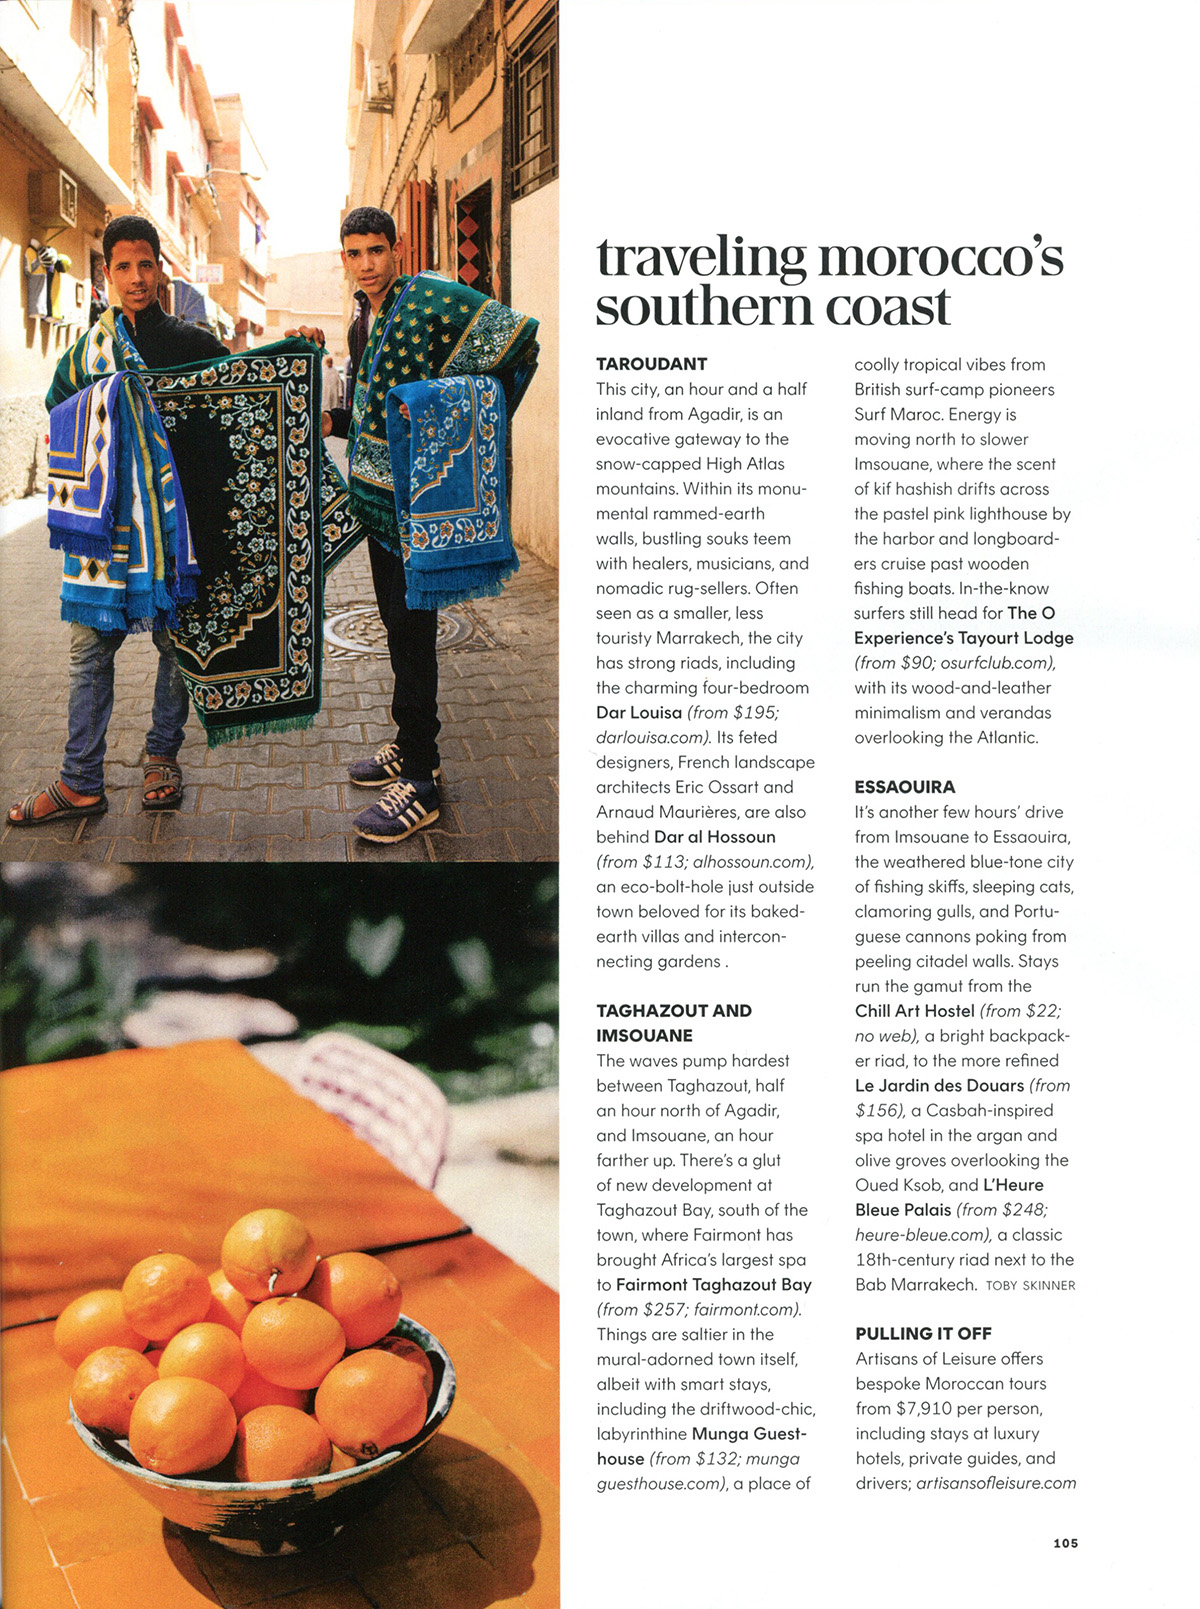 Conde Nast Traveler Artisans of Leisure customized Morocco tours